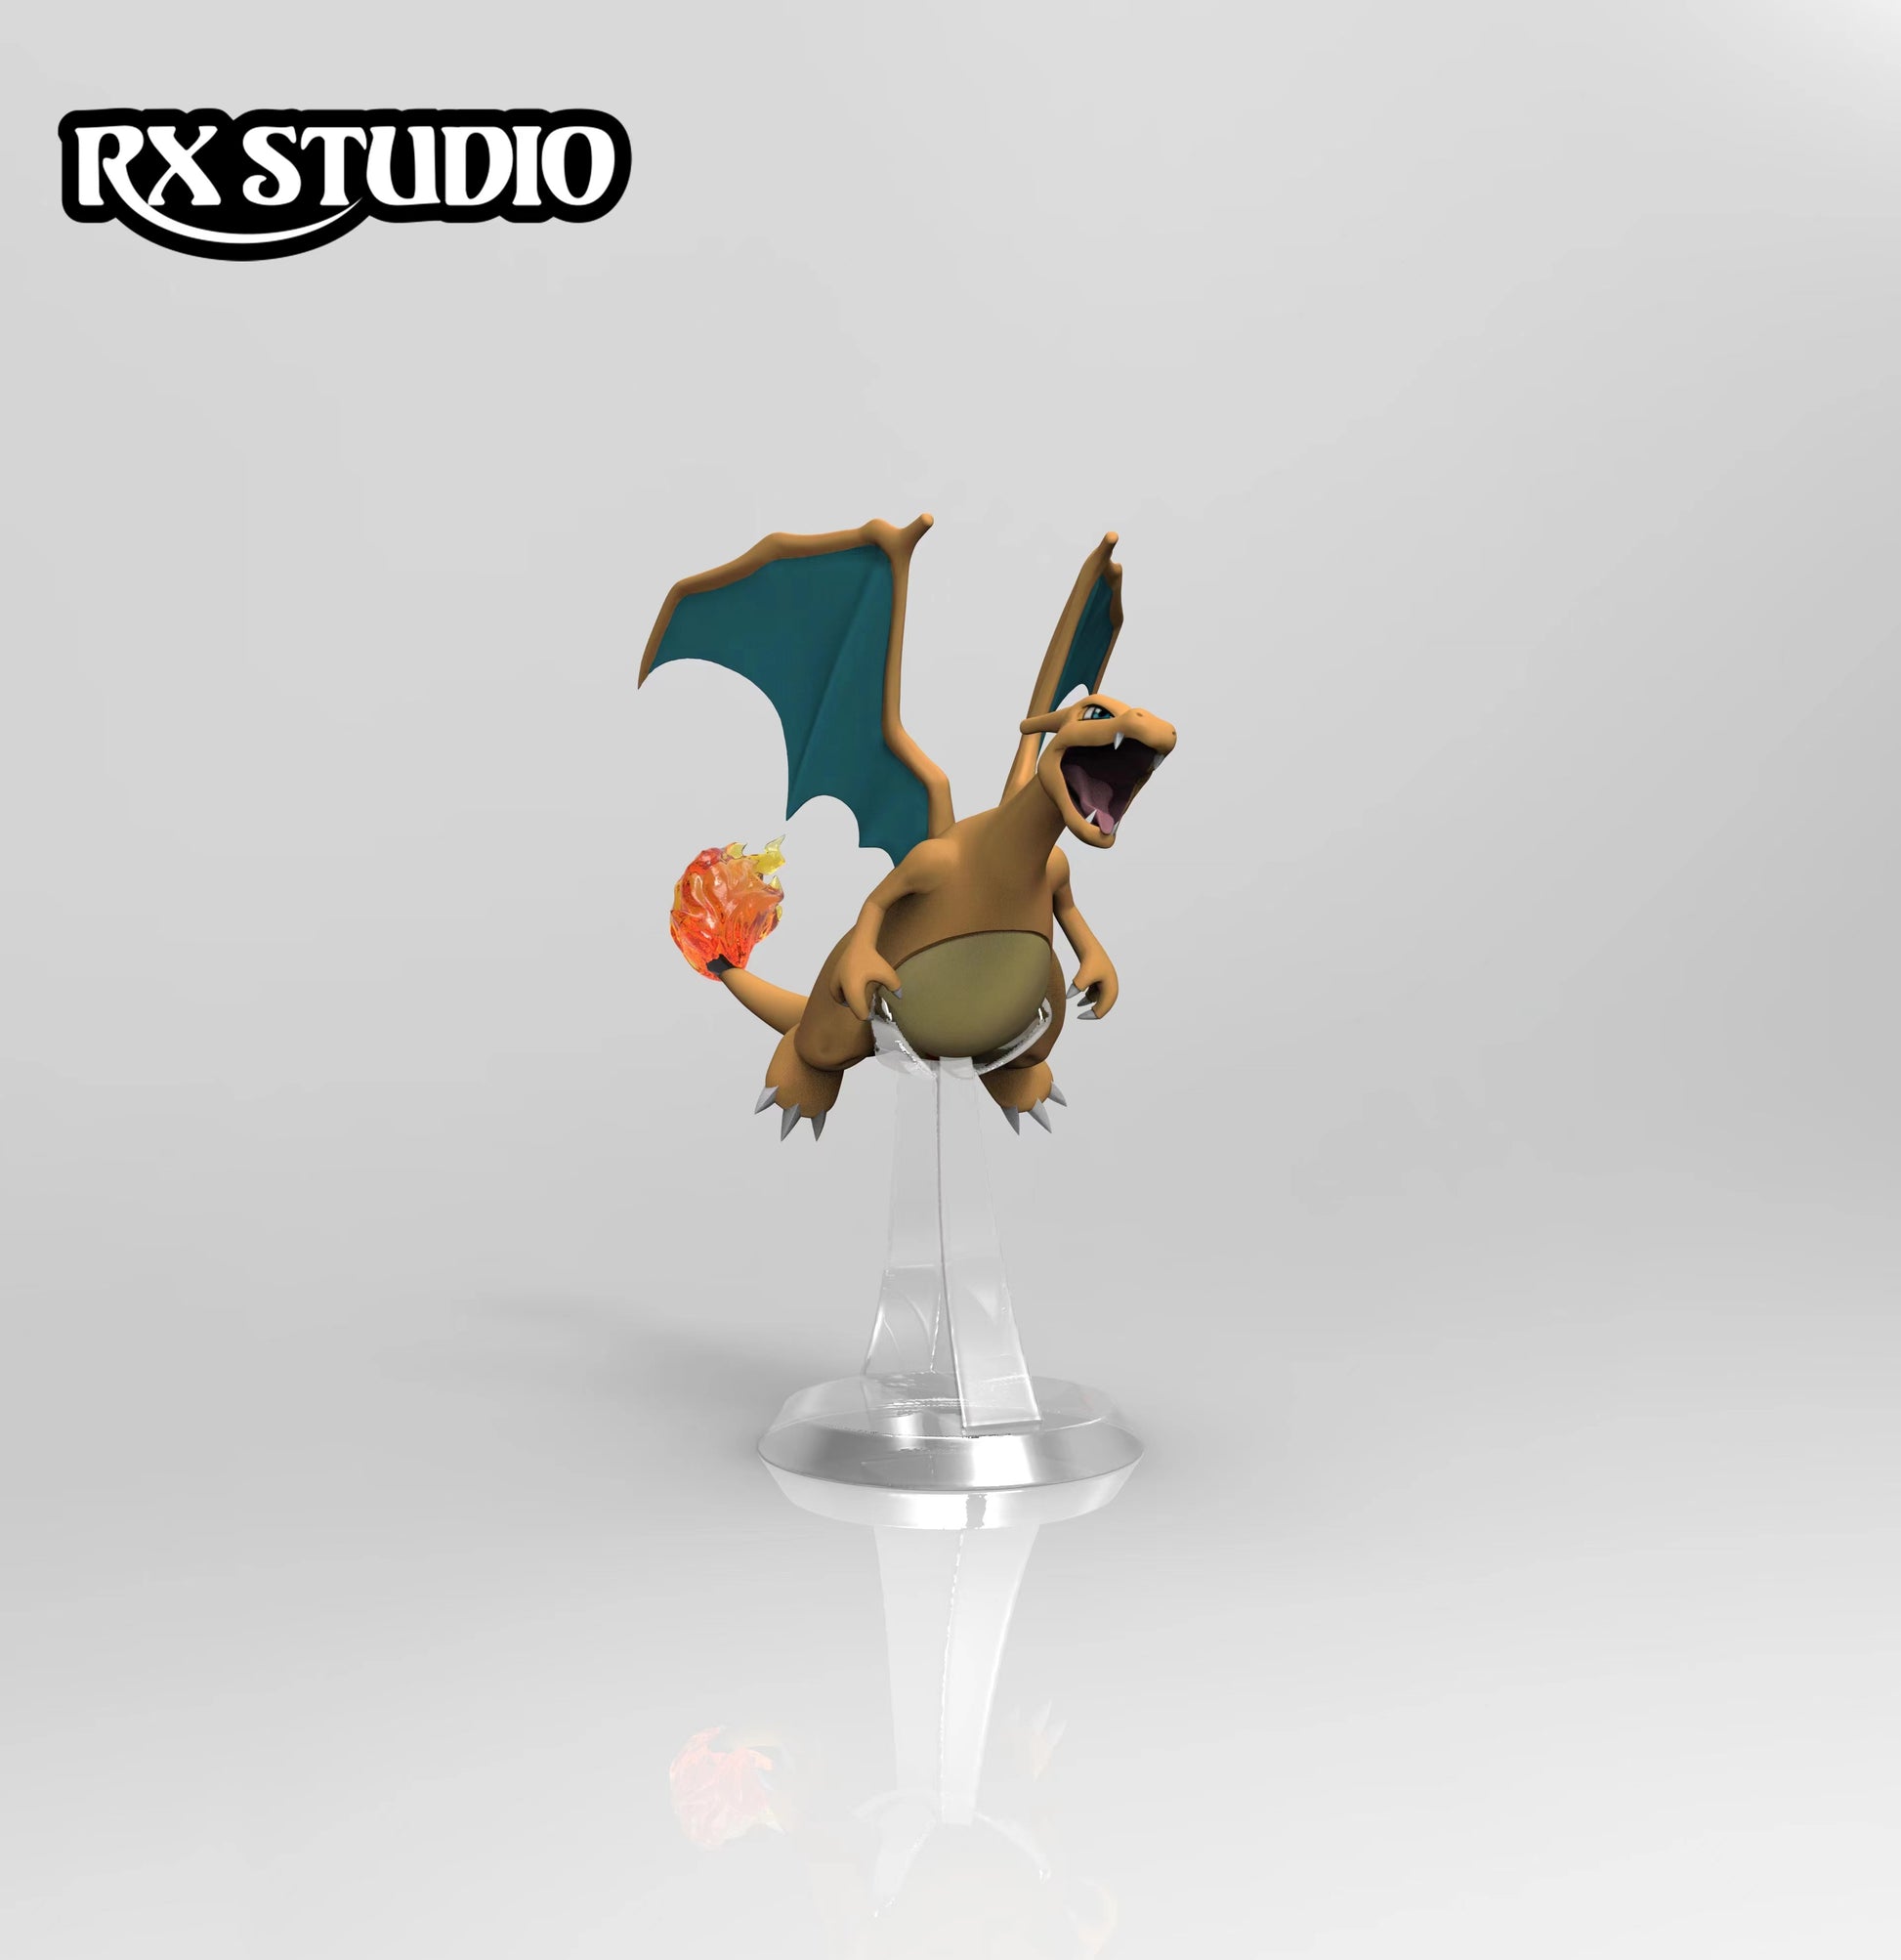 〖In Stock〗Pokemon Scale World Mega Charizard X #006 1:20 - BF Studio